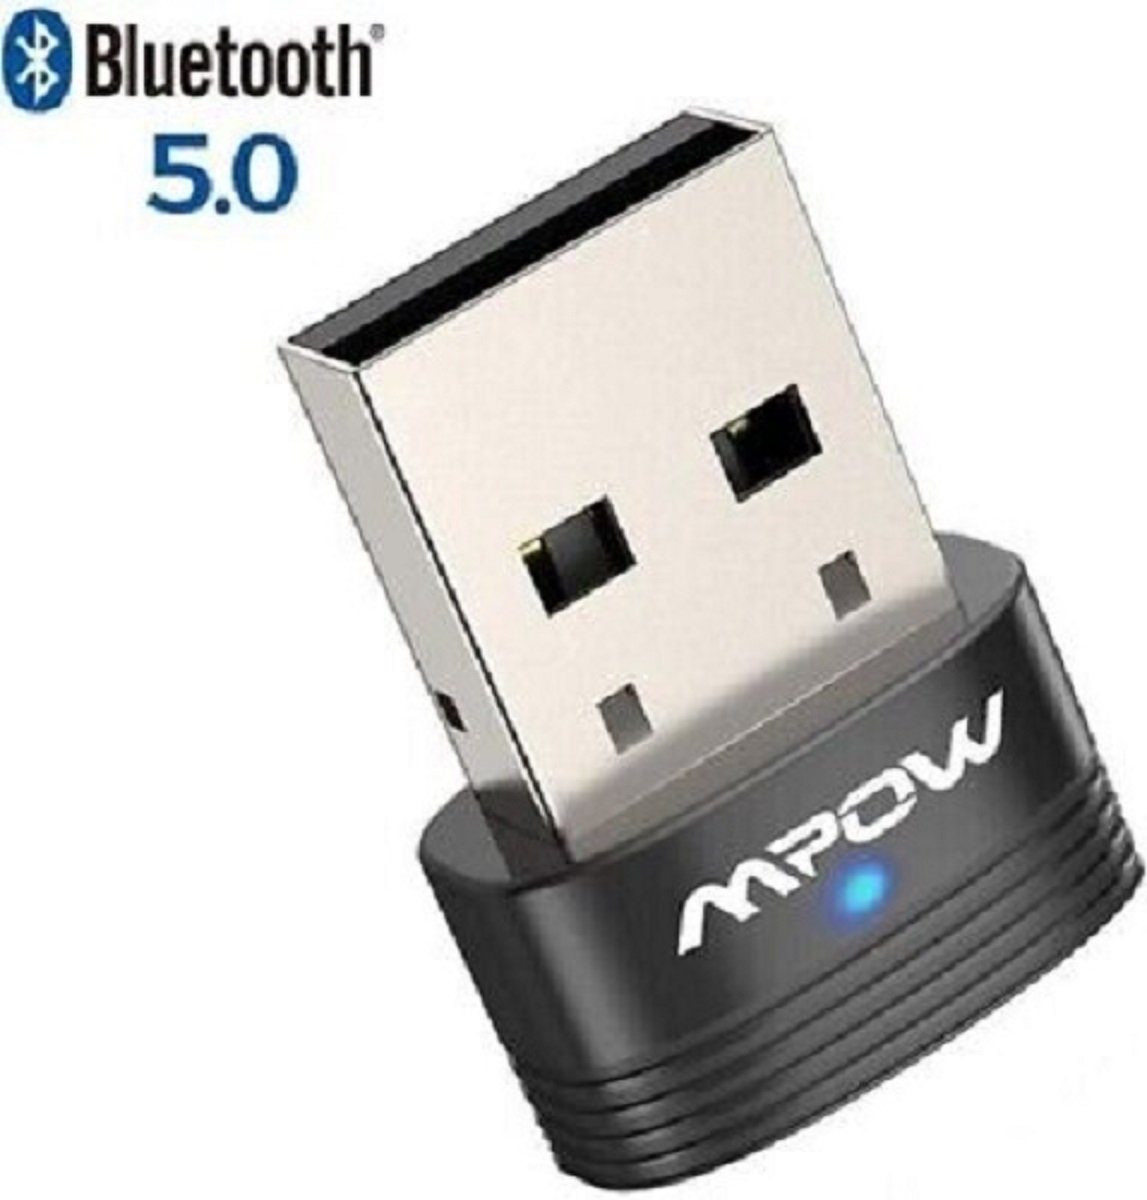 Mpow Bluetooth®-Sender Bluetooth 5.0 USB Empfänger Dongle Sender